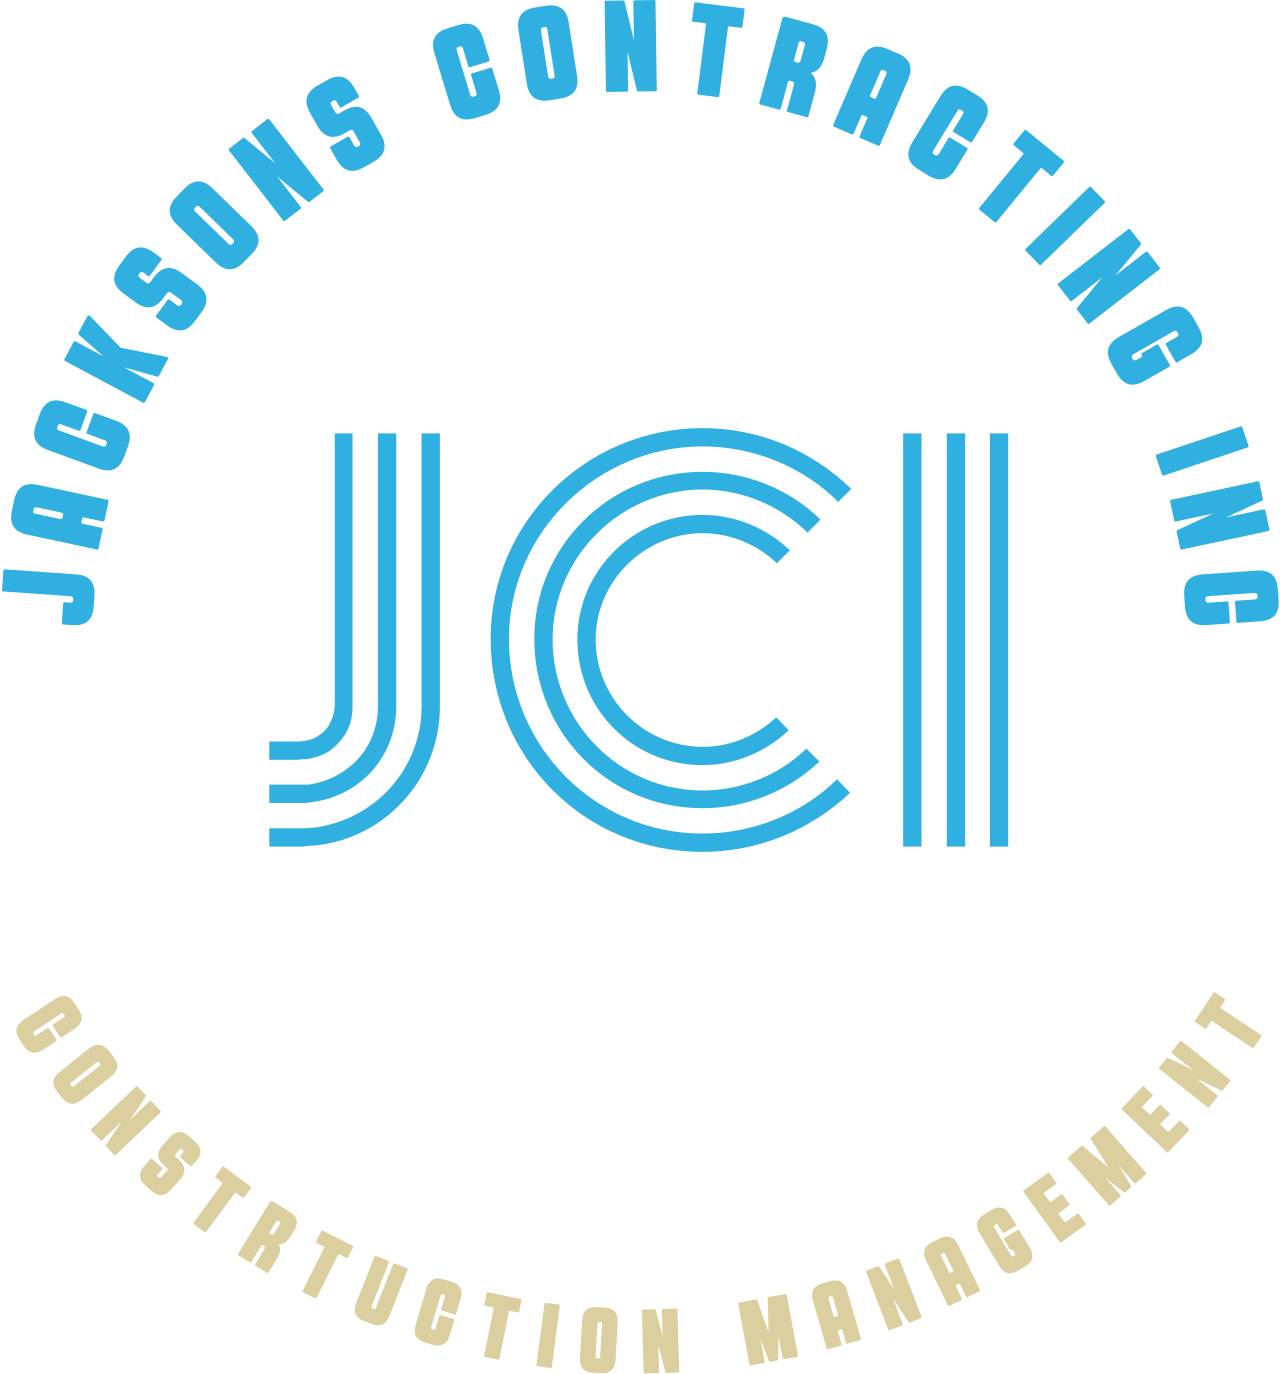 Jacksons Contracting INC's logo